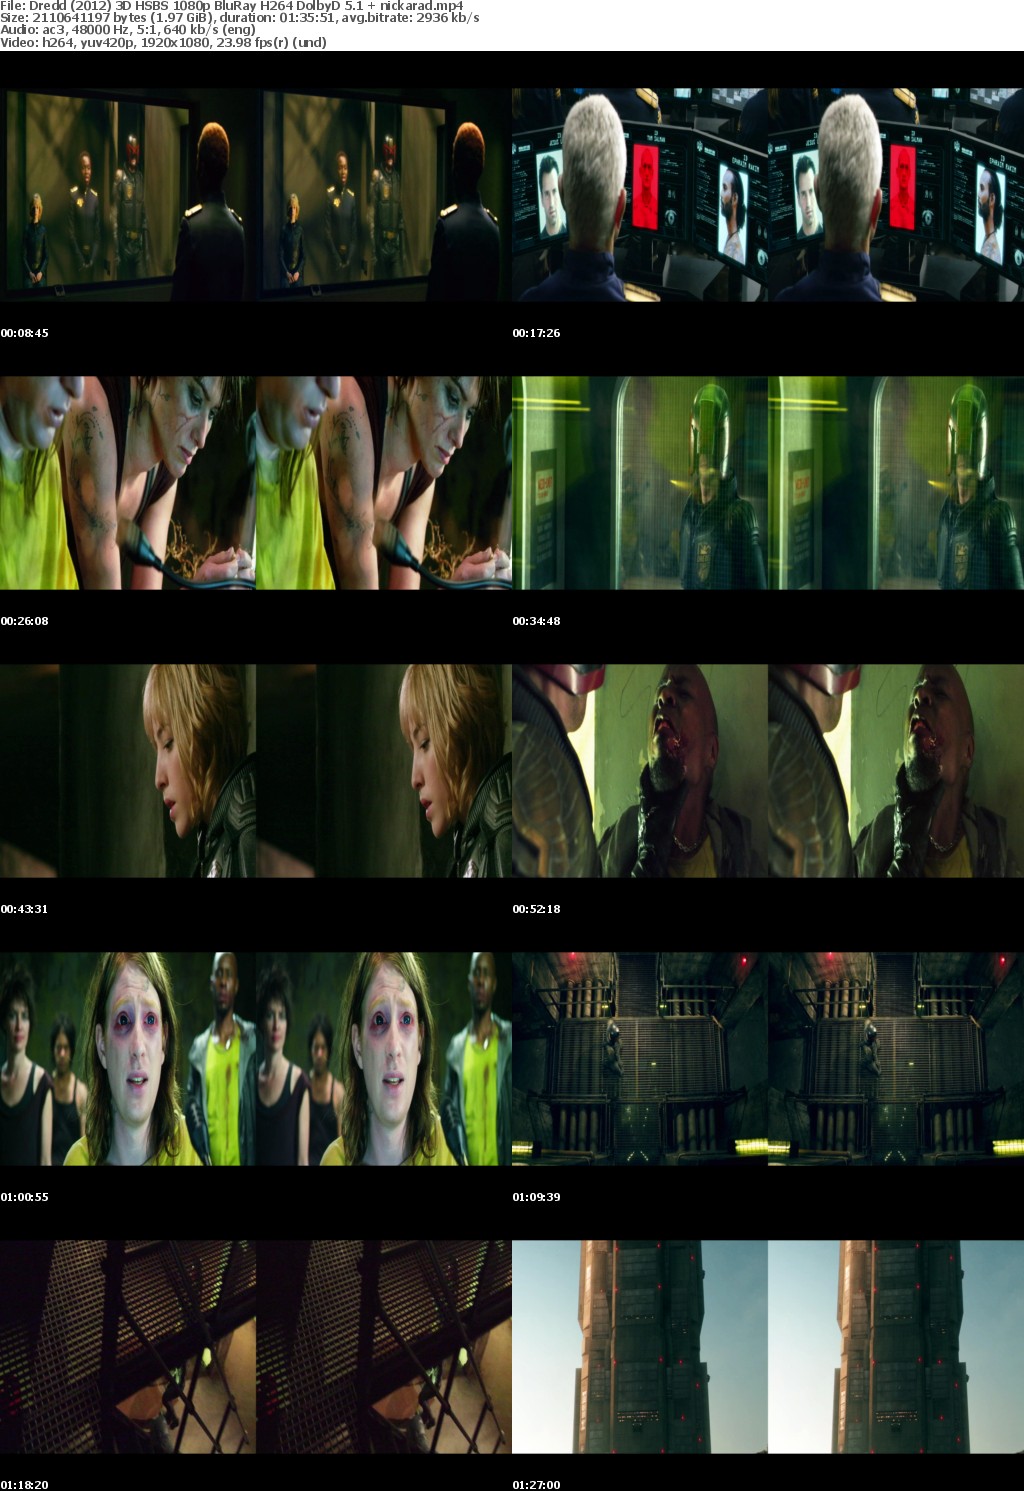 Dredd (2012) 3D HSBS 1080p BluRay H264 DolbyD 5 1 nickarad